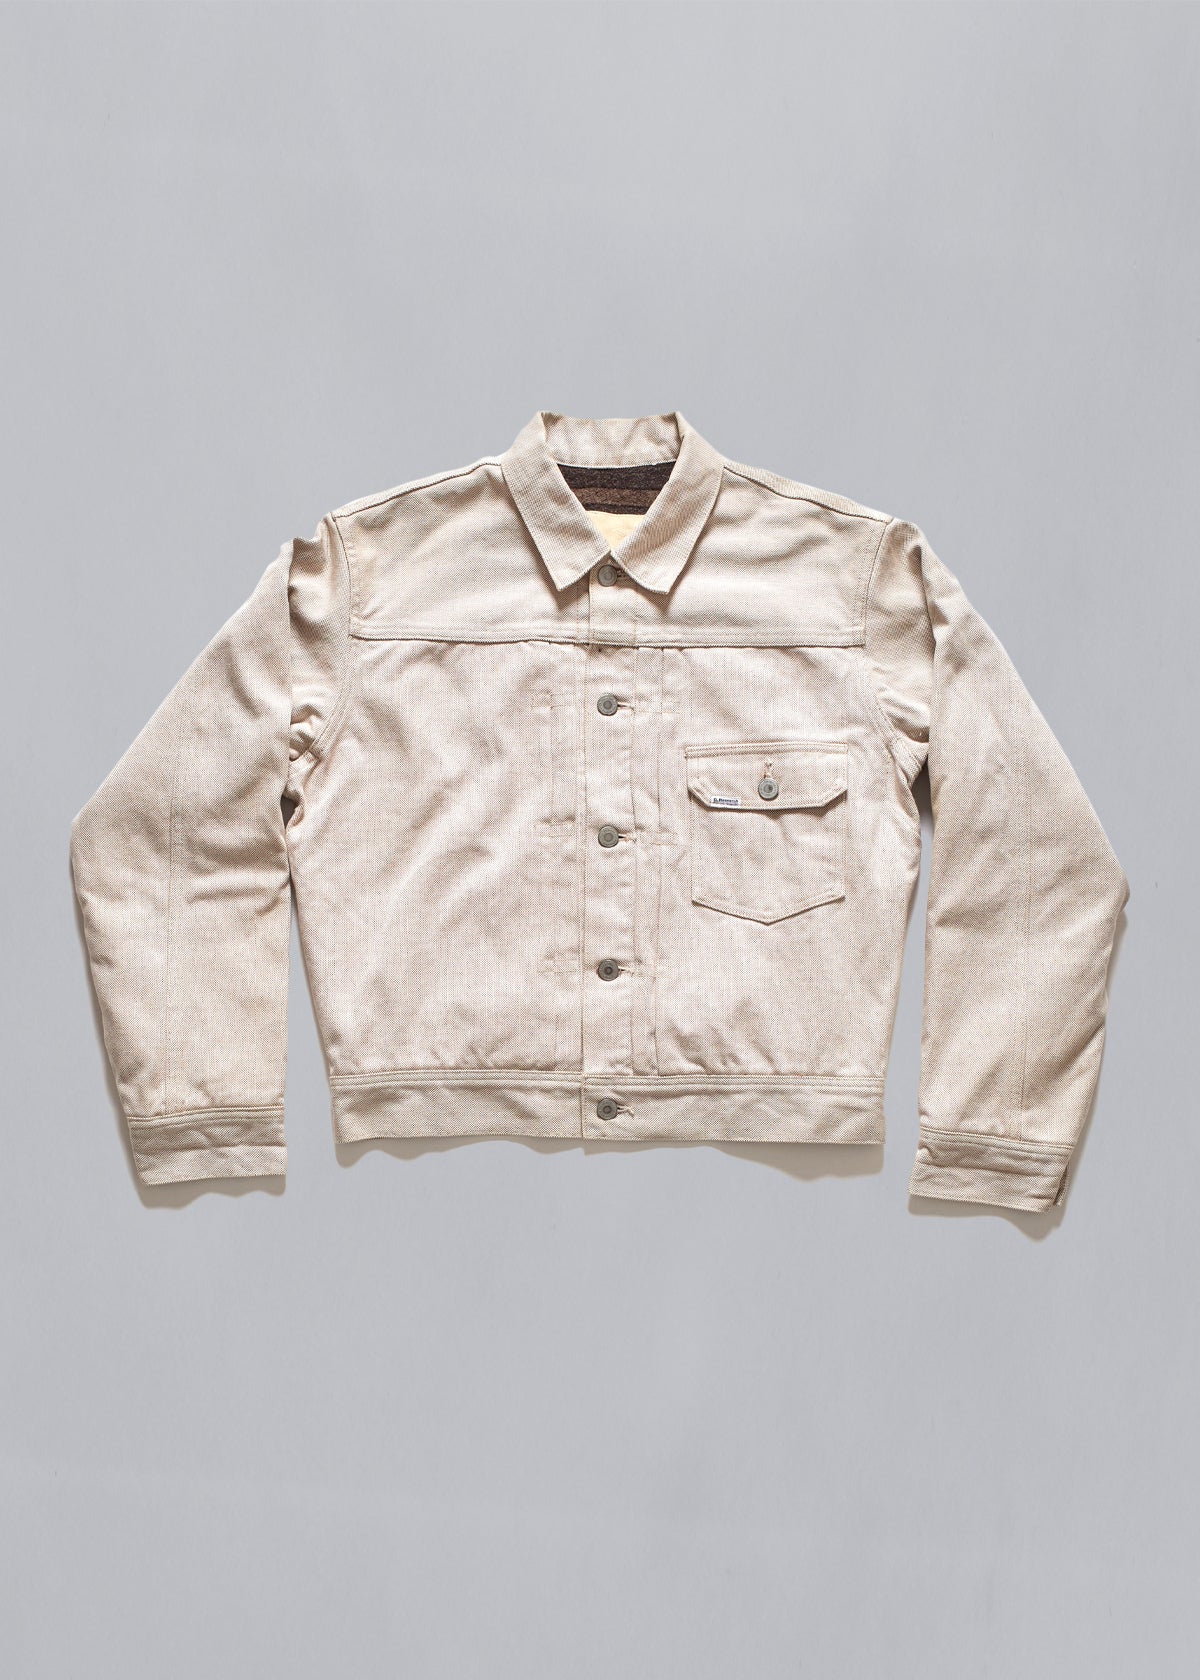 Type 1 Jacket Parody Style 224 1997 - Medium - The Archivist Store